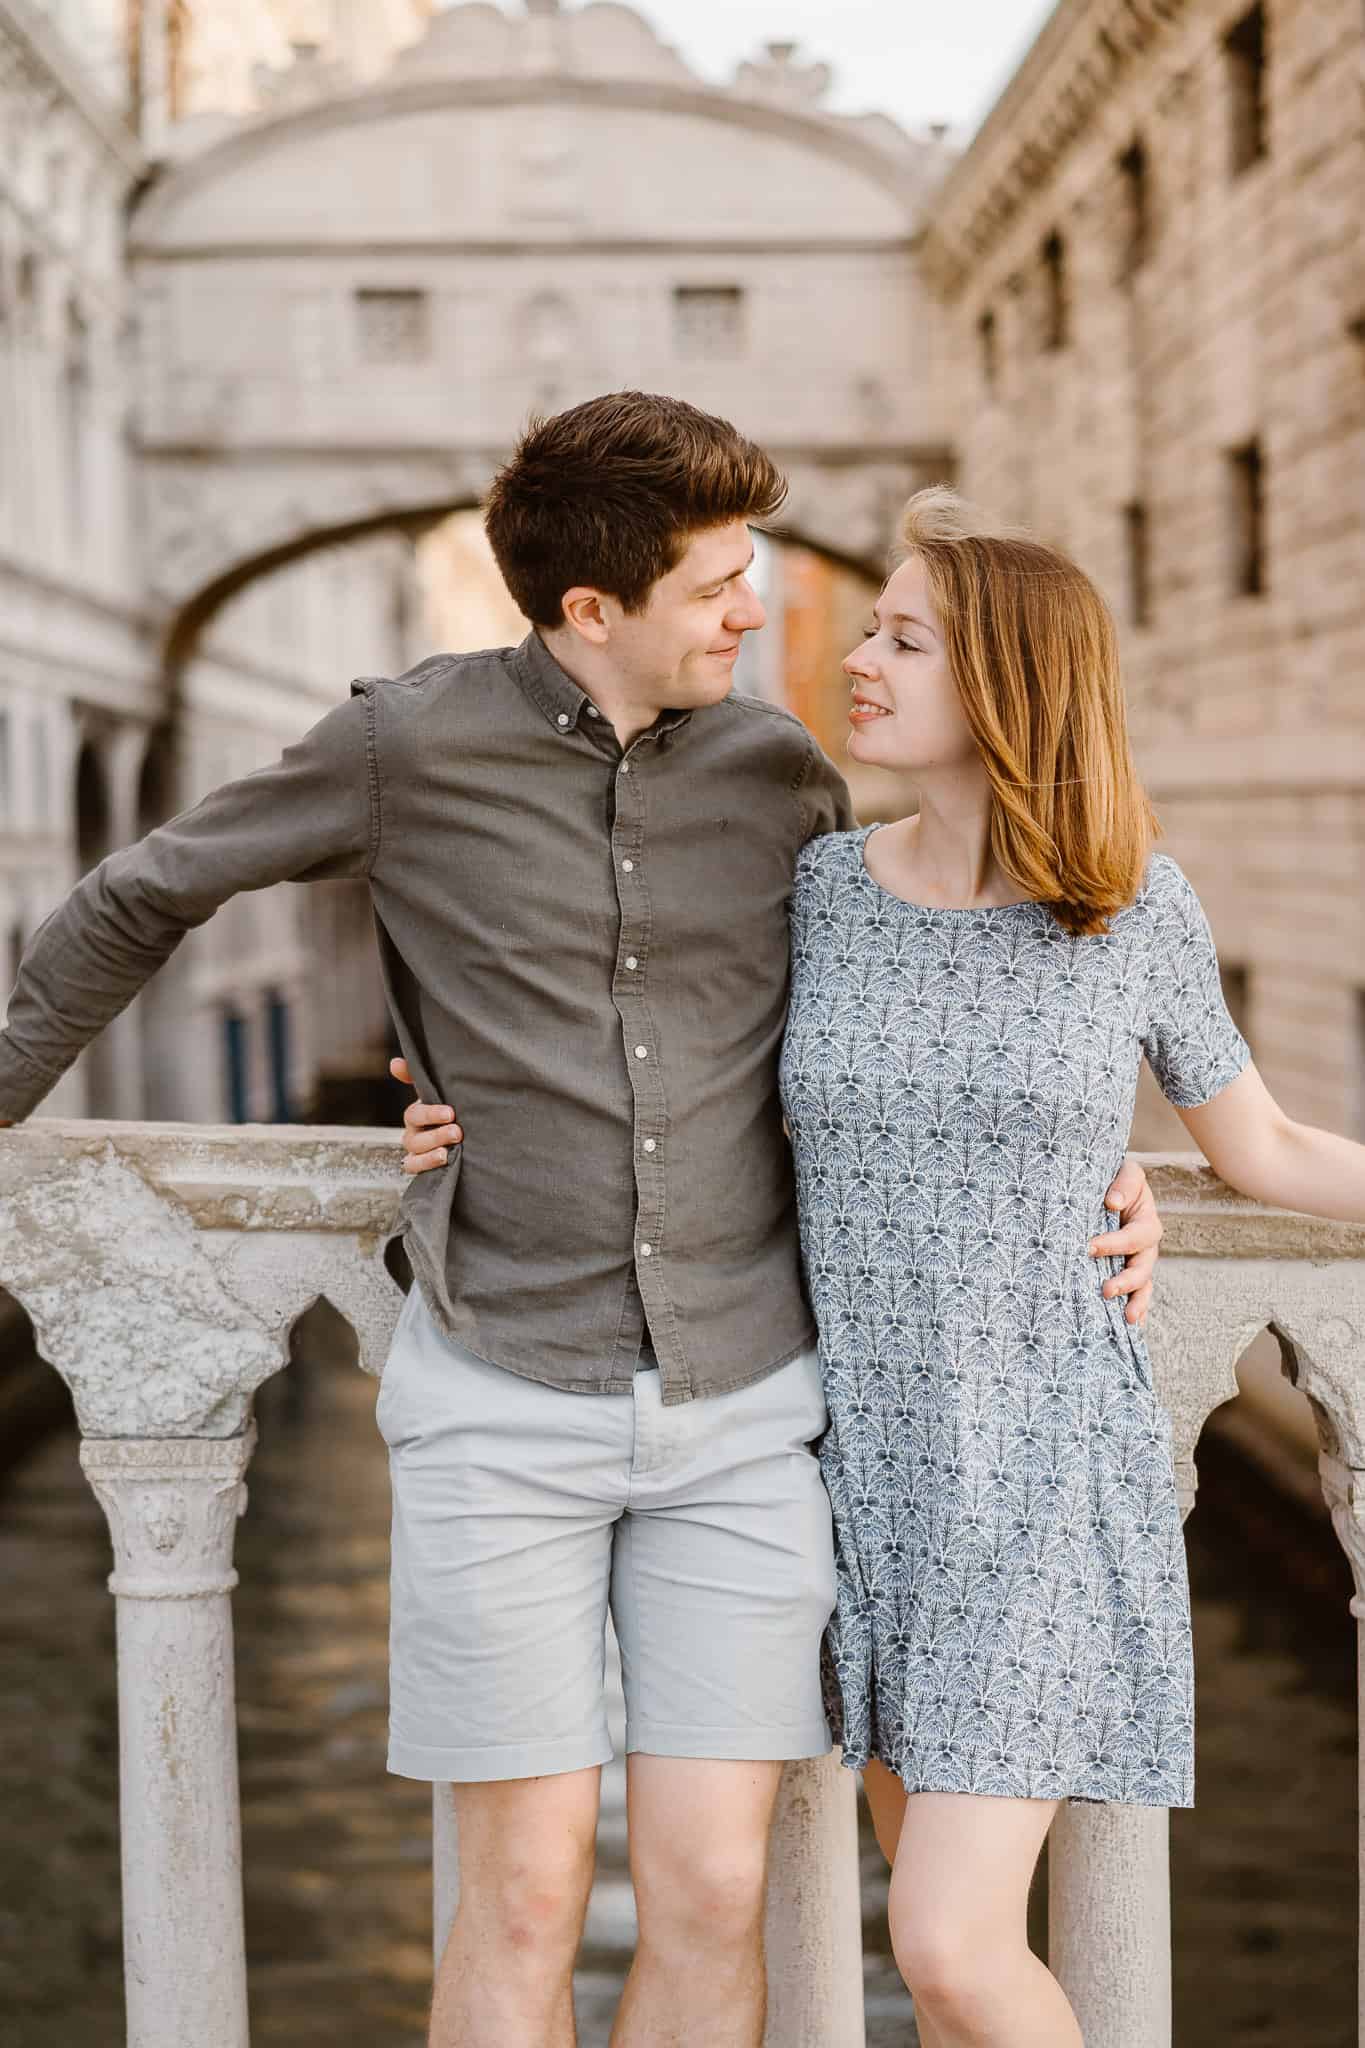 Engagement photo shoot in Venice at sunrise under ponte dei Sospiri